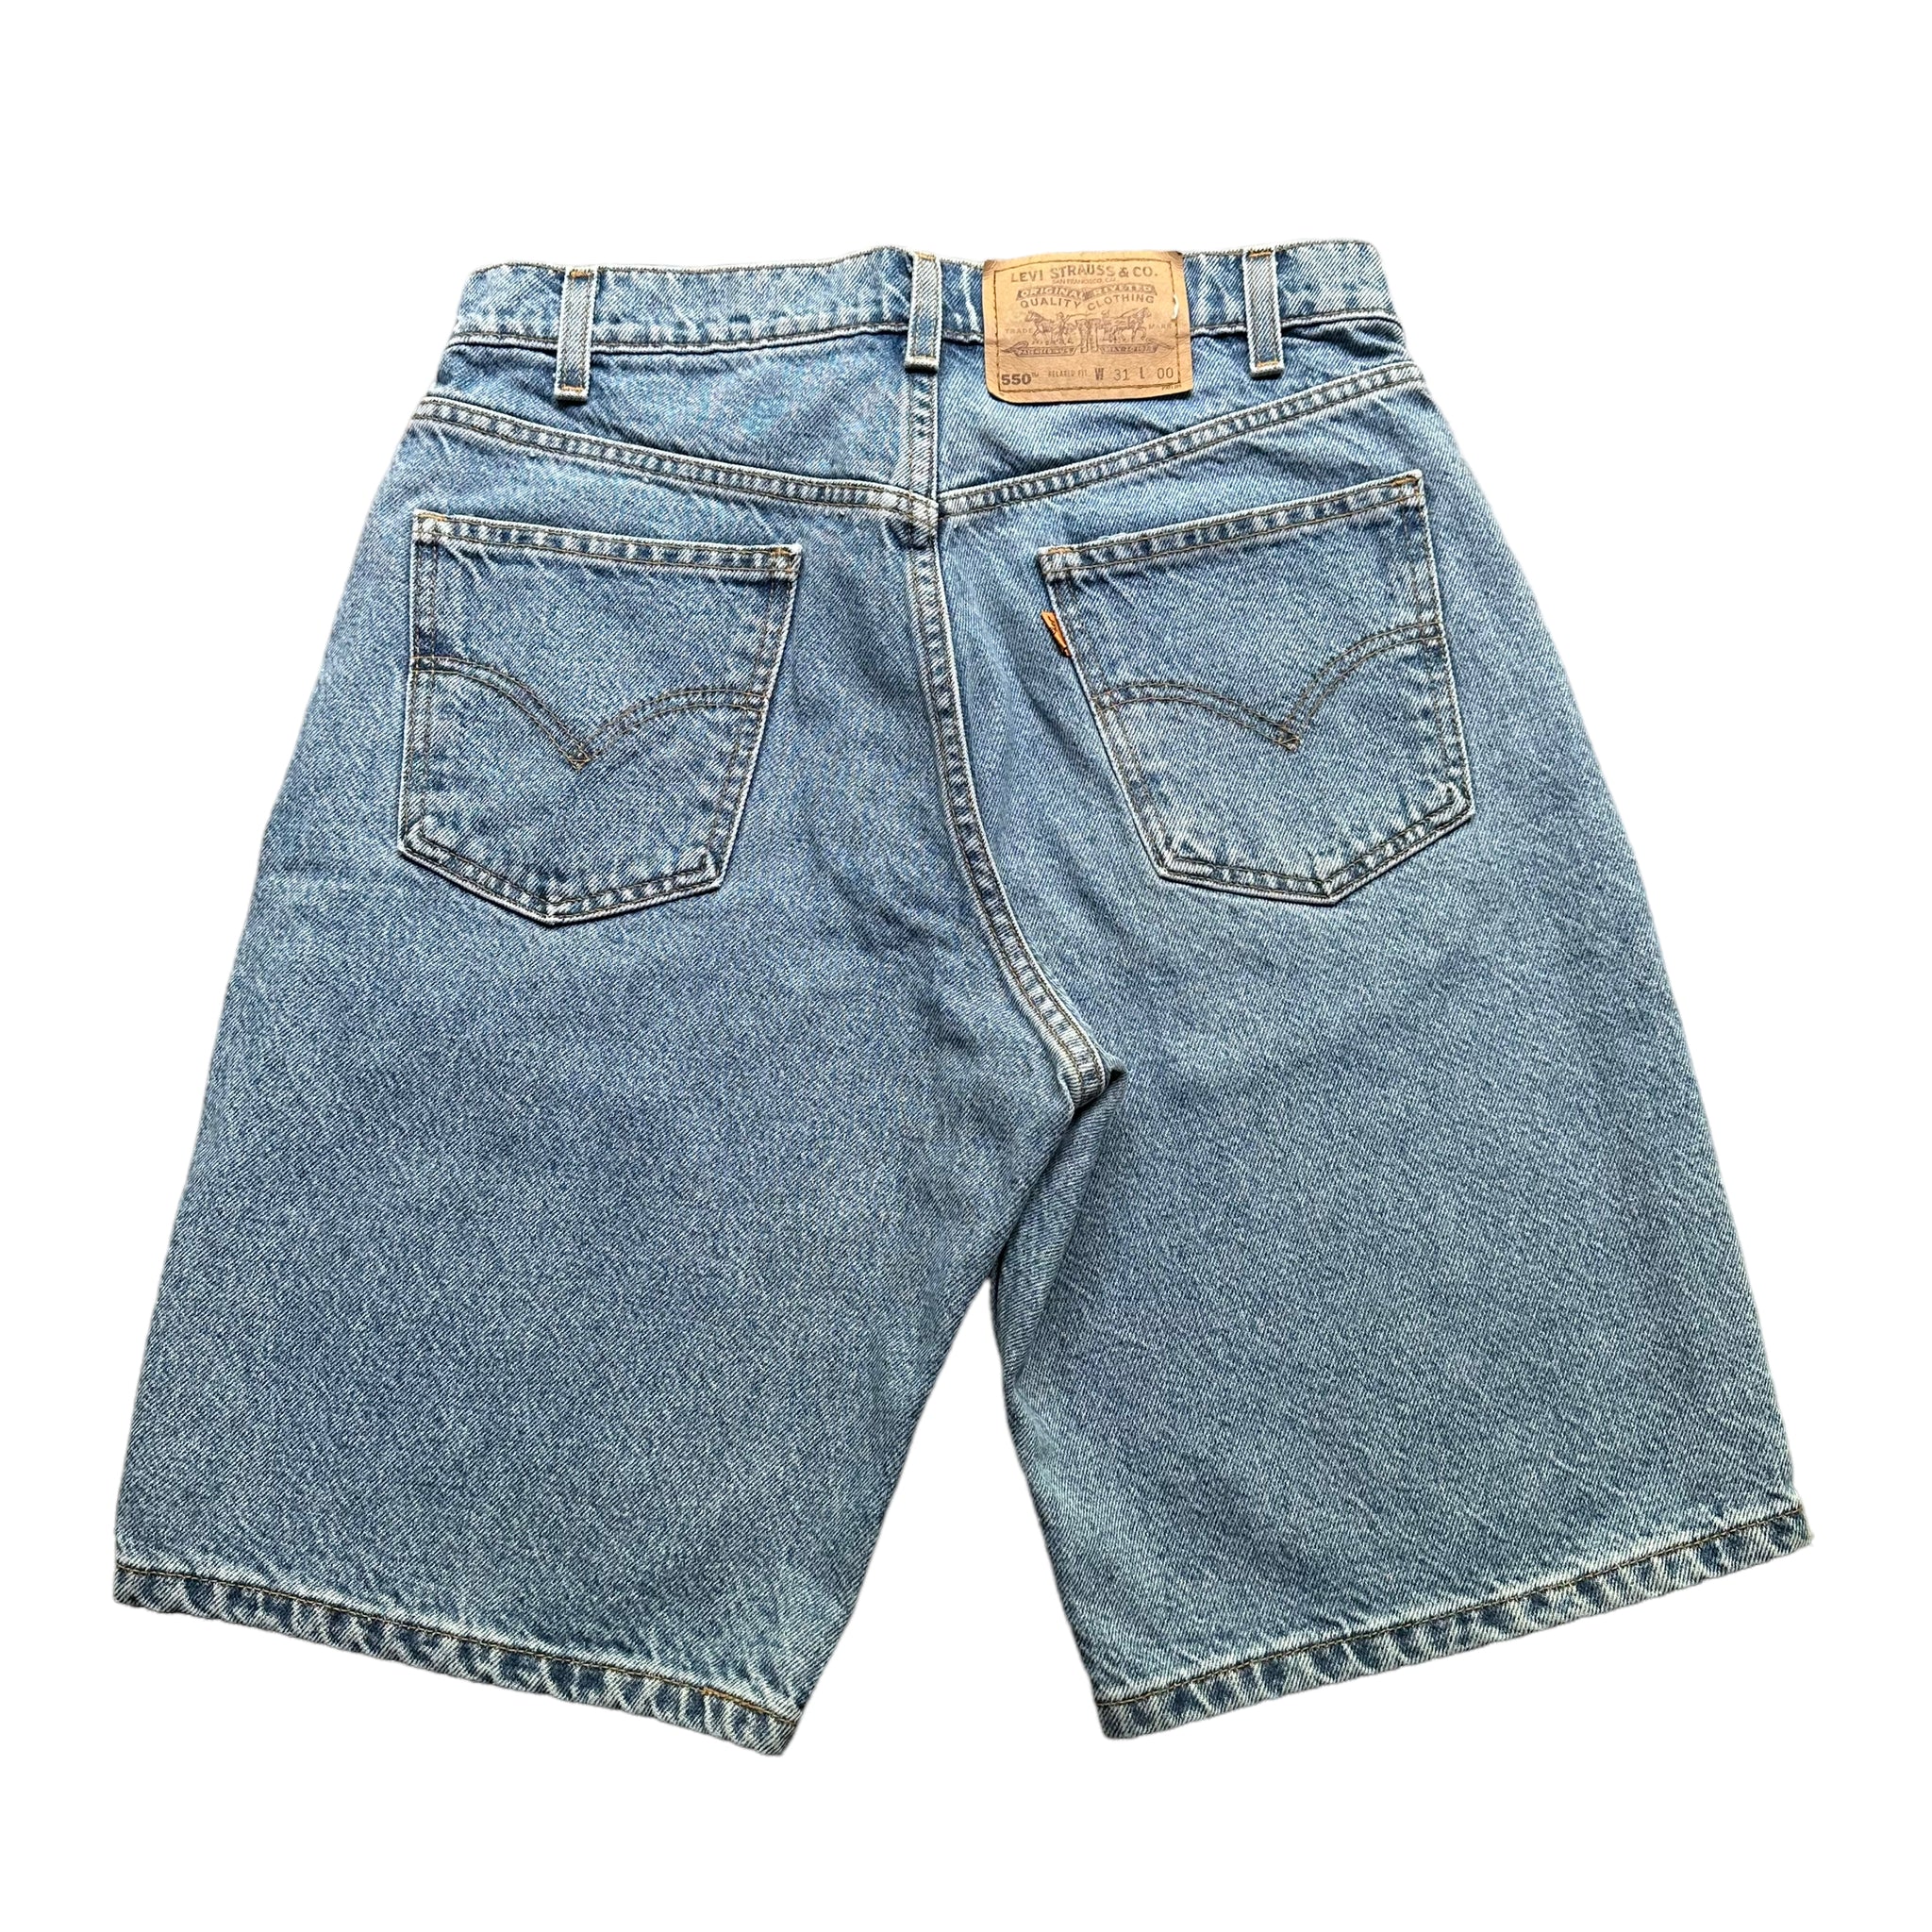 Levi’s orange tab jean shorts 30